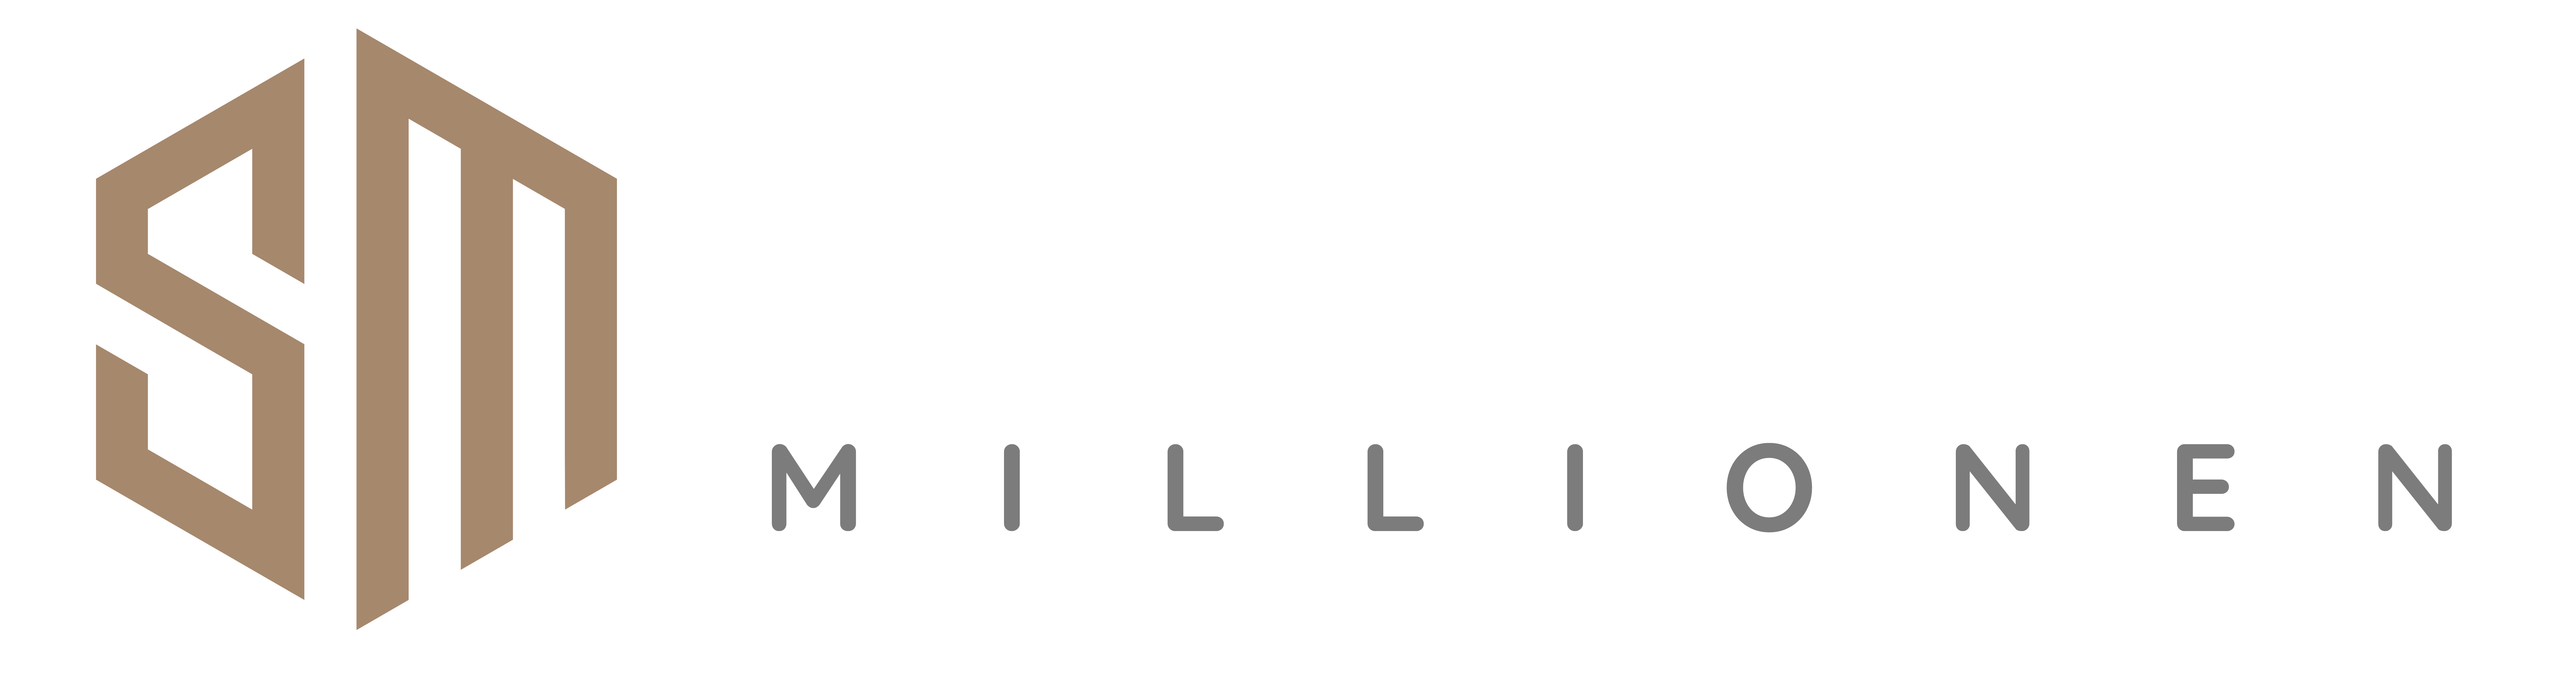 Selfmade Millionen Club Logo